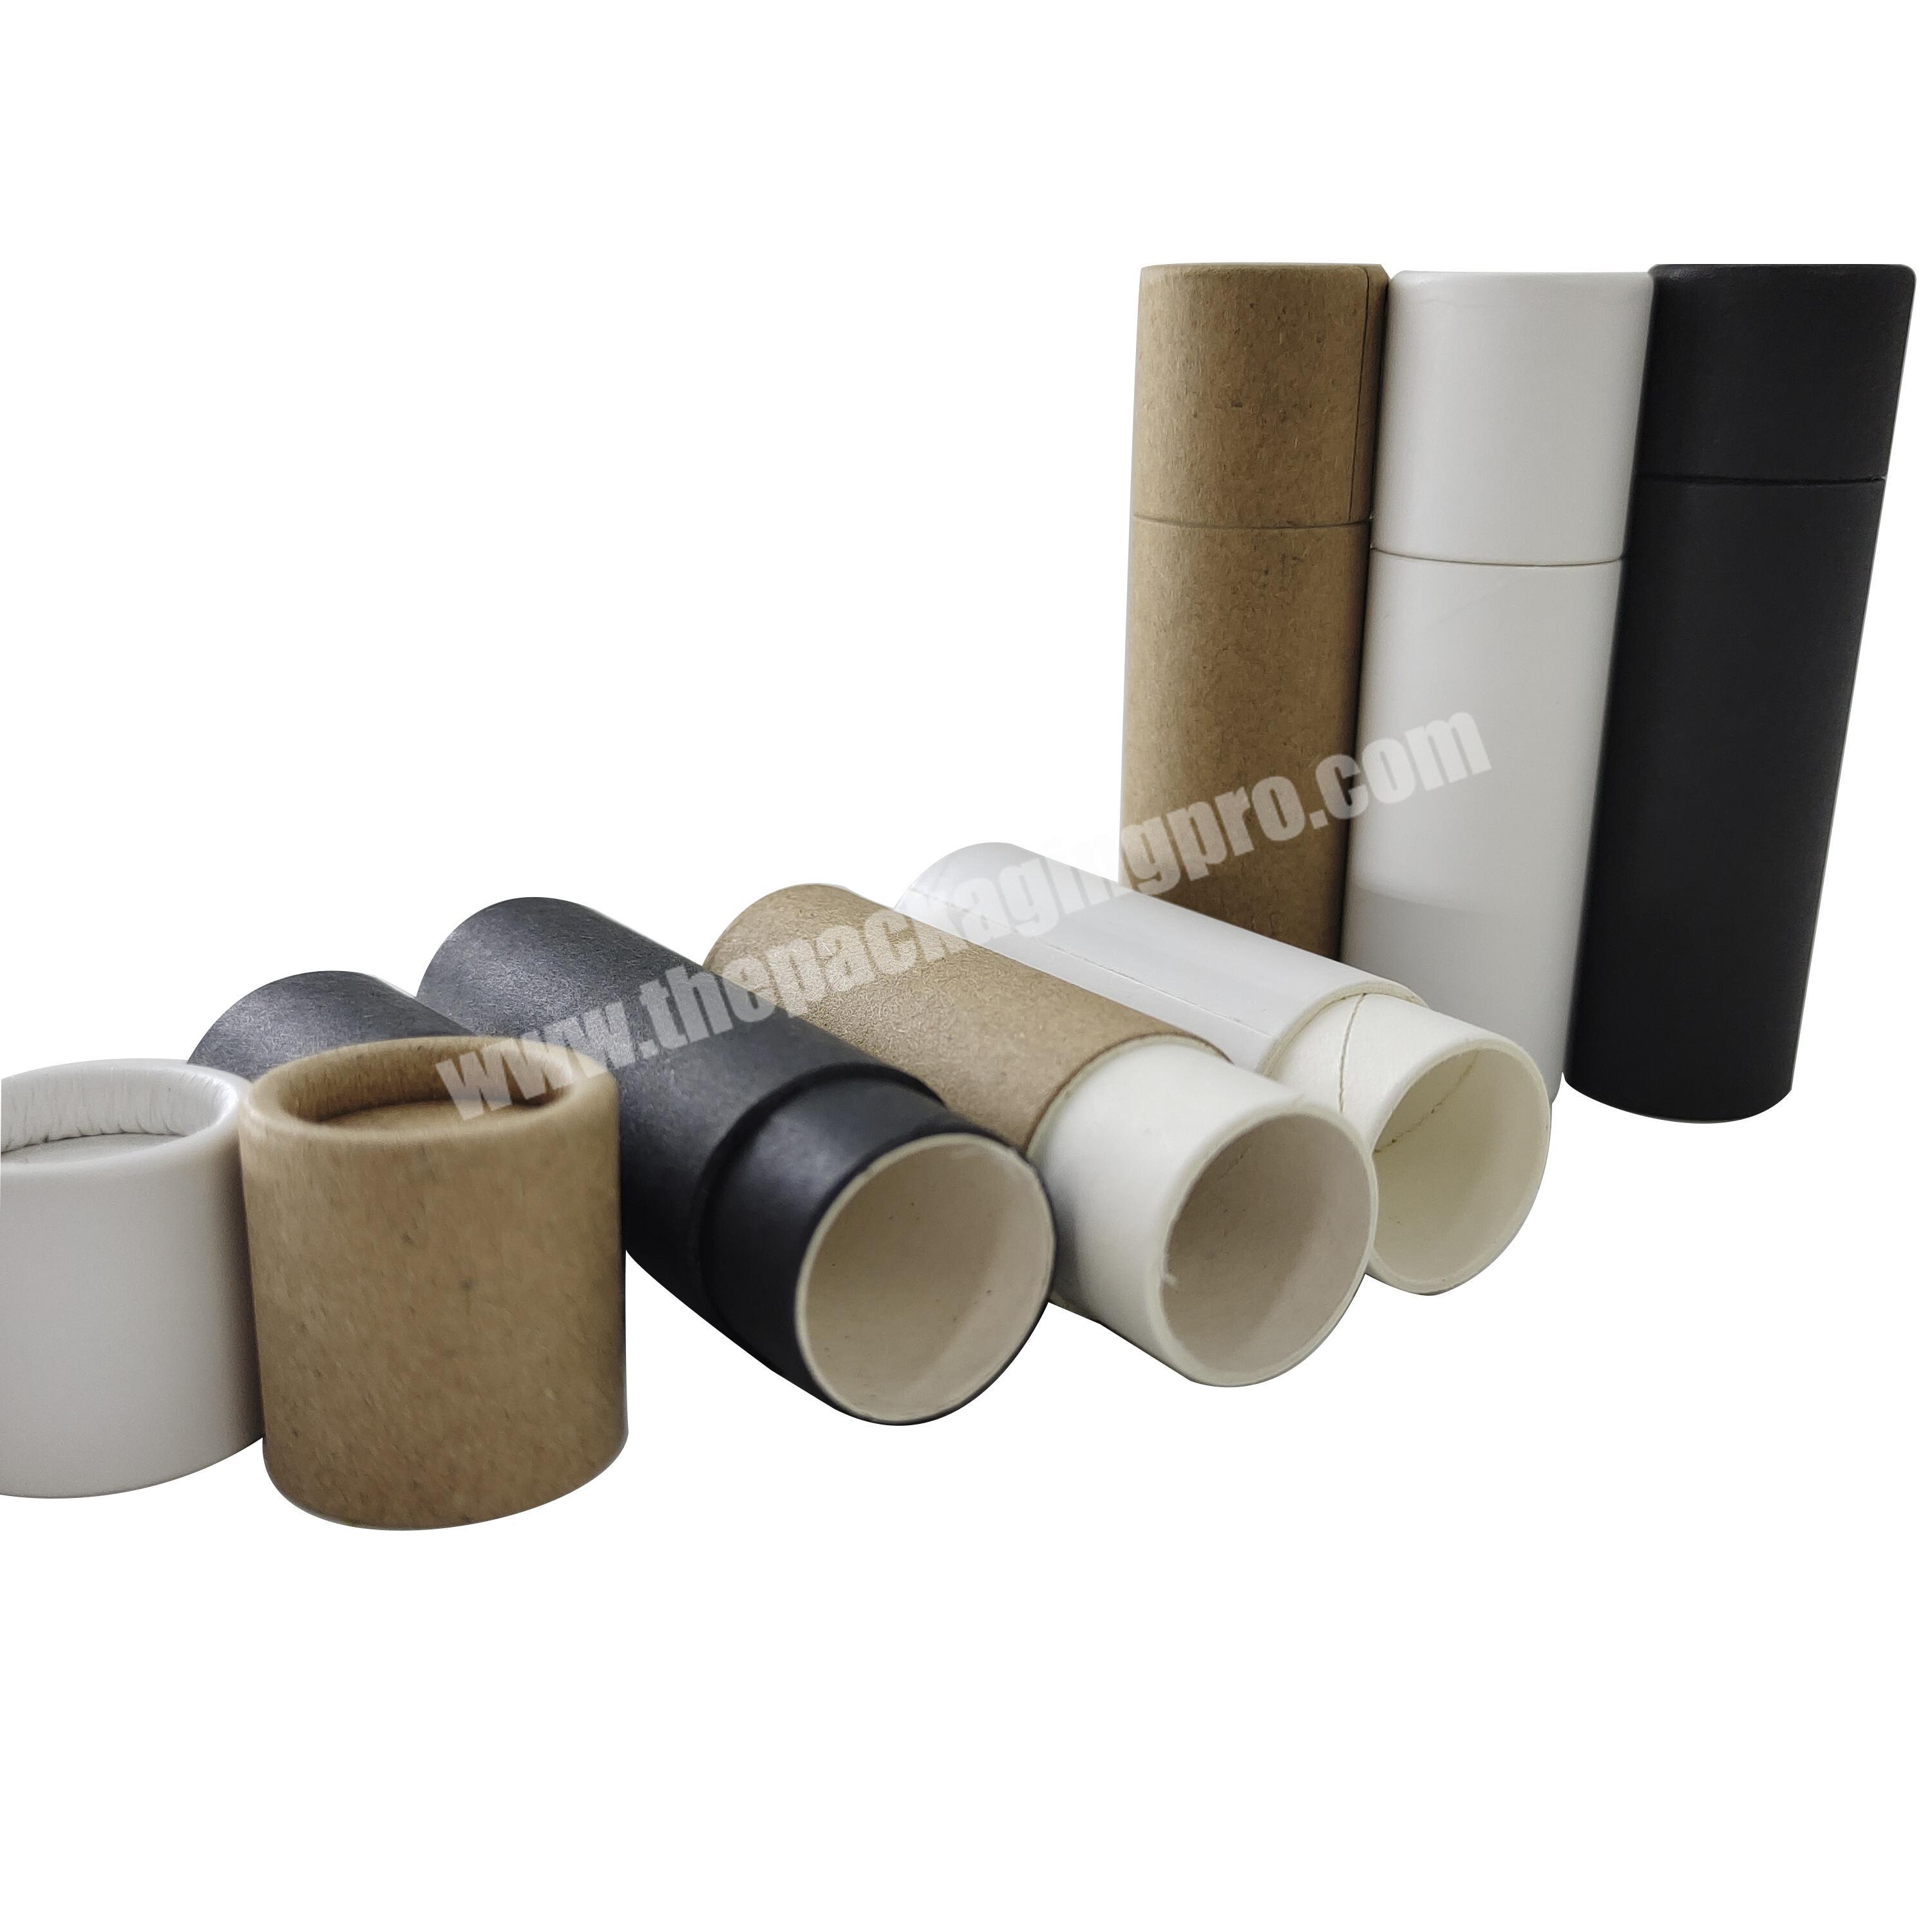 0.3oz biodegradable solid perfume packaging push up lip balm deodorant paper tube packaging